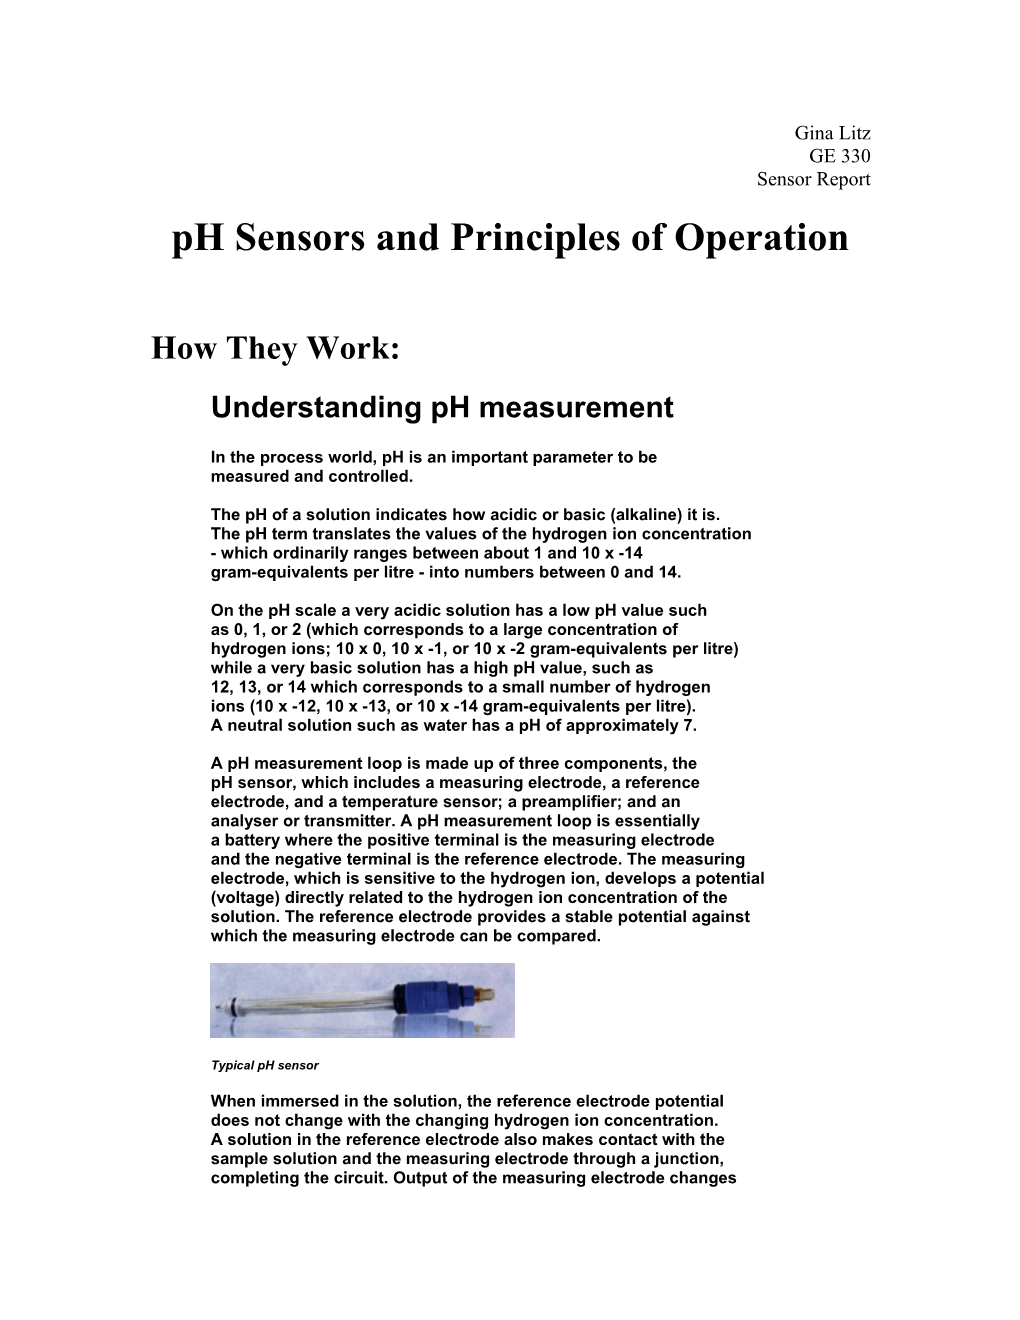 Ph Sensors and Principles of Operation